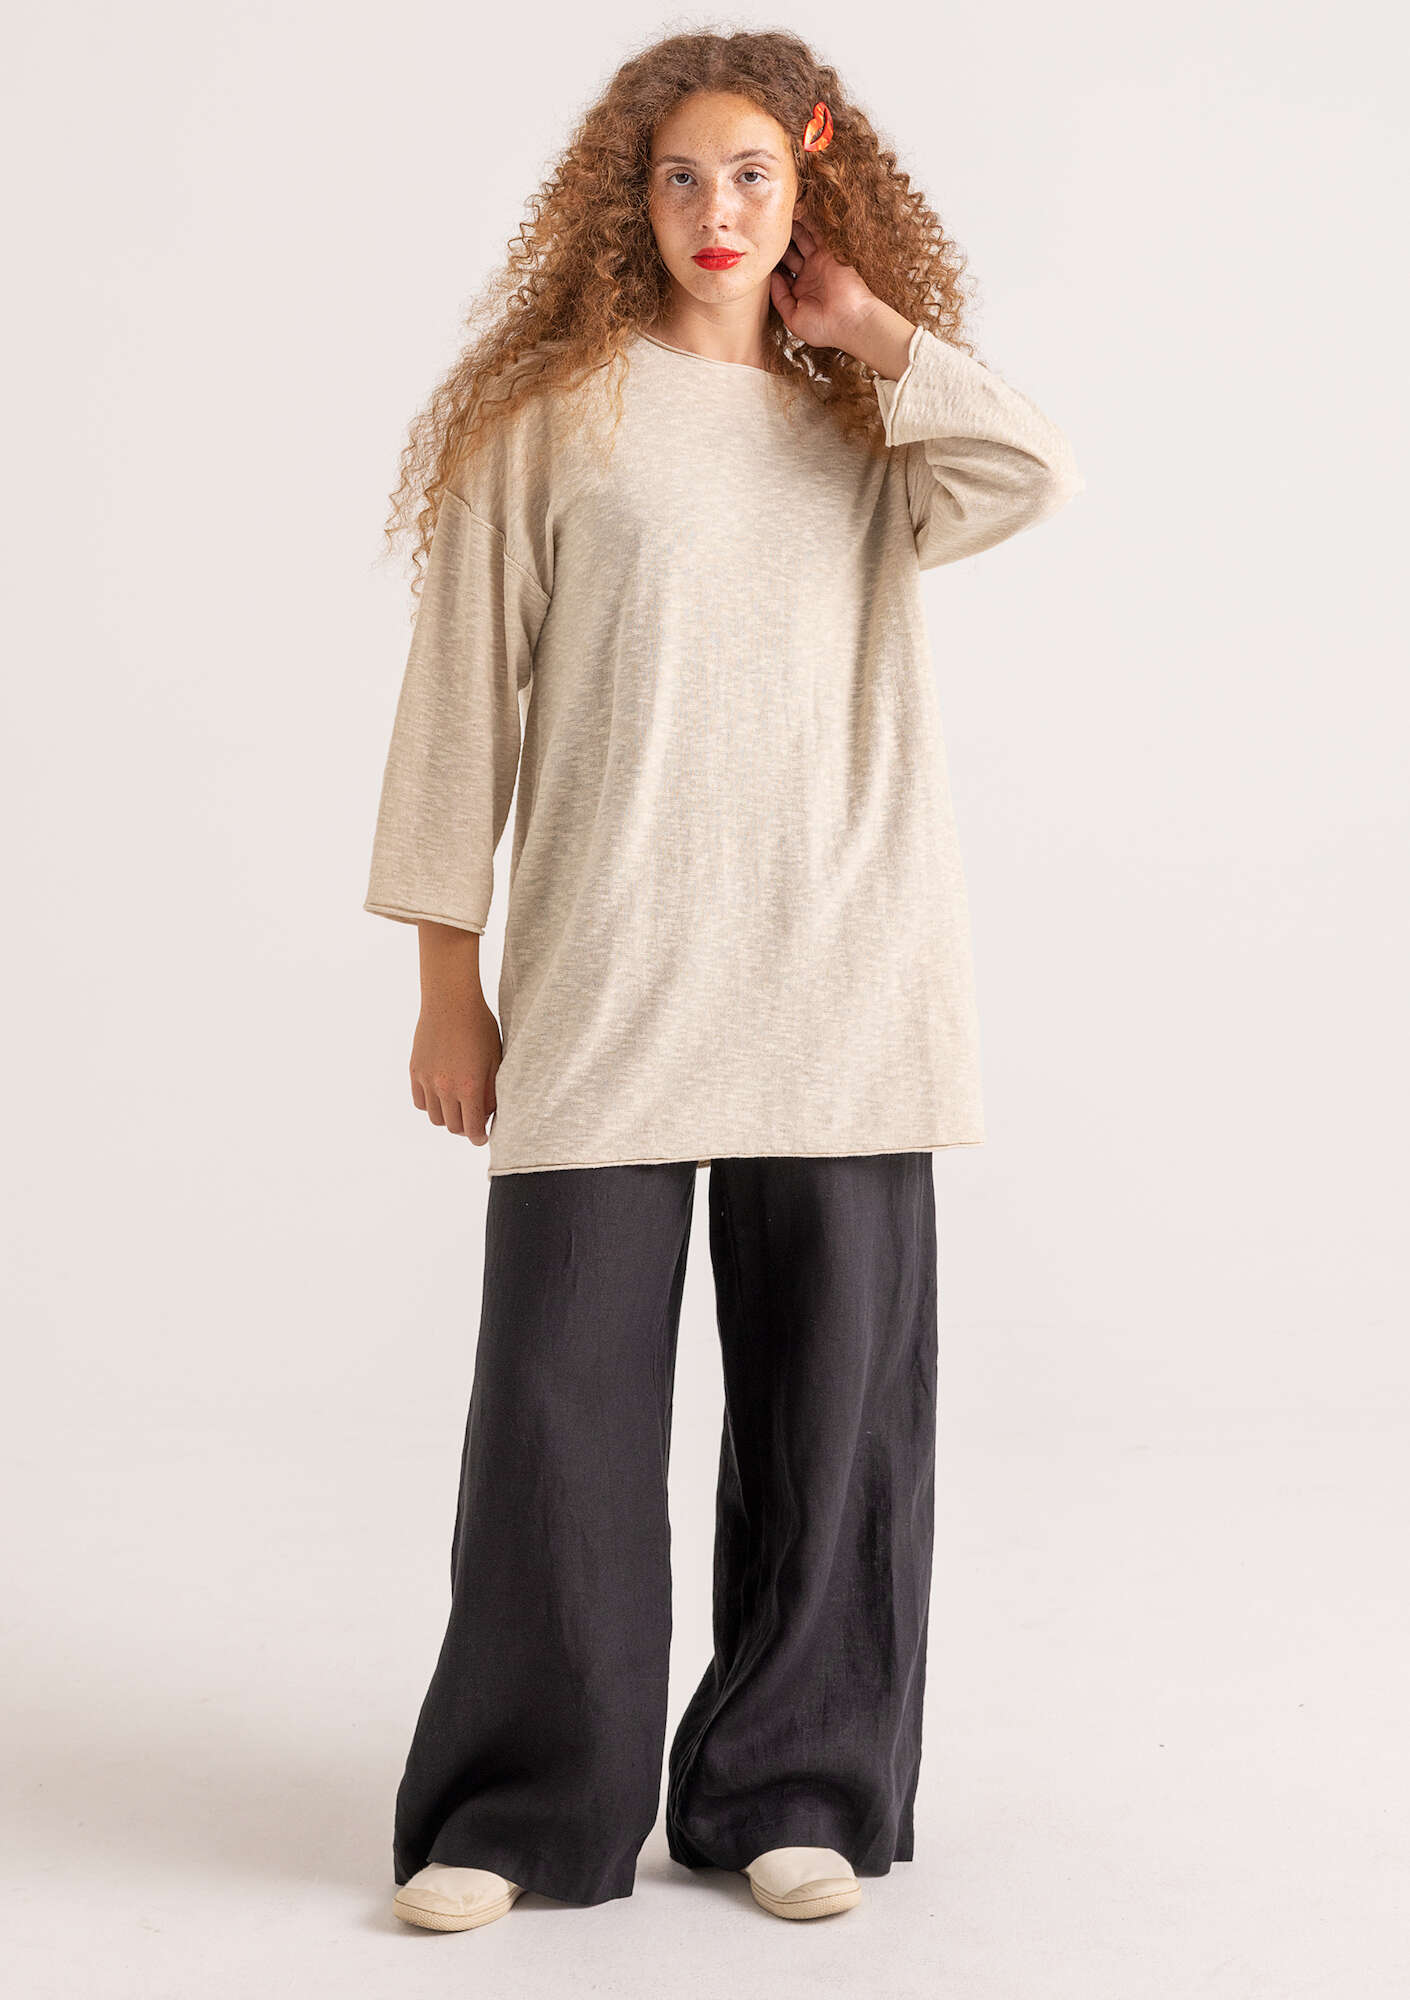 Knitted linen/organic cotton longline sweater undyed